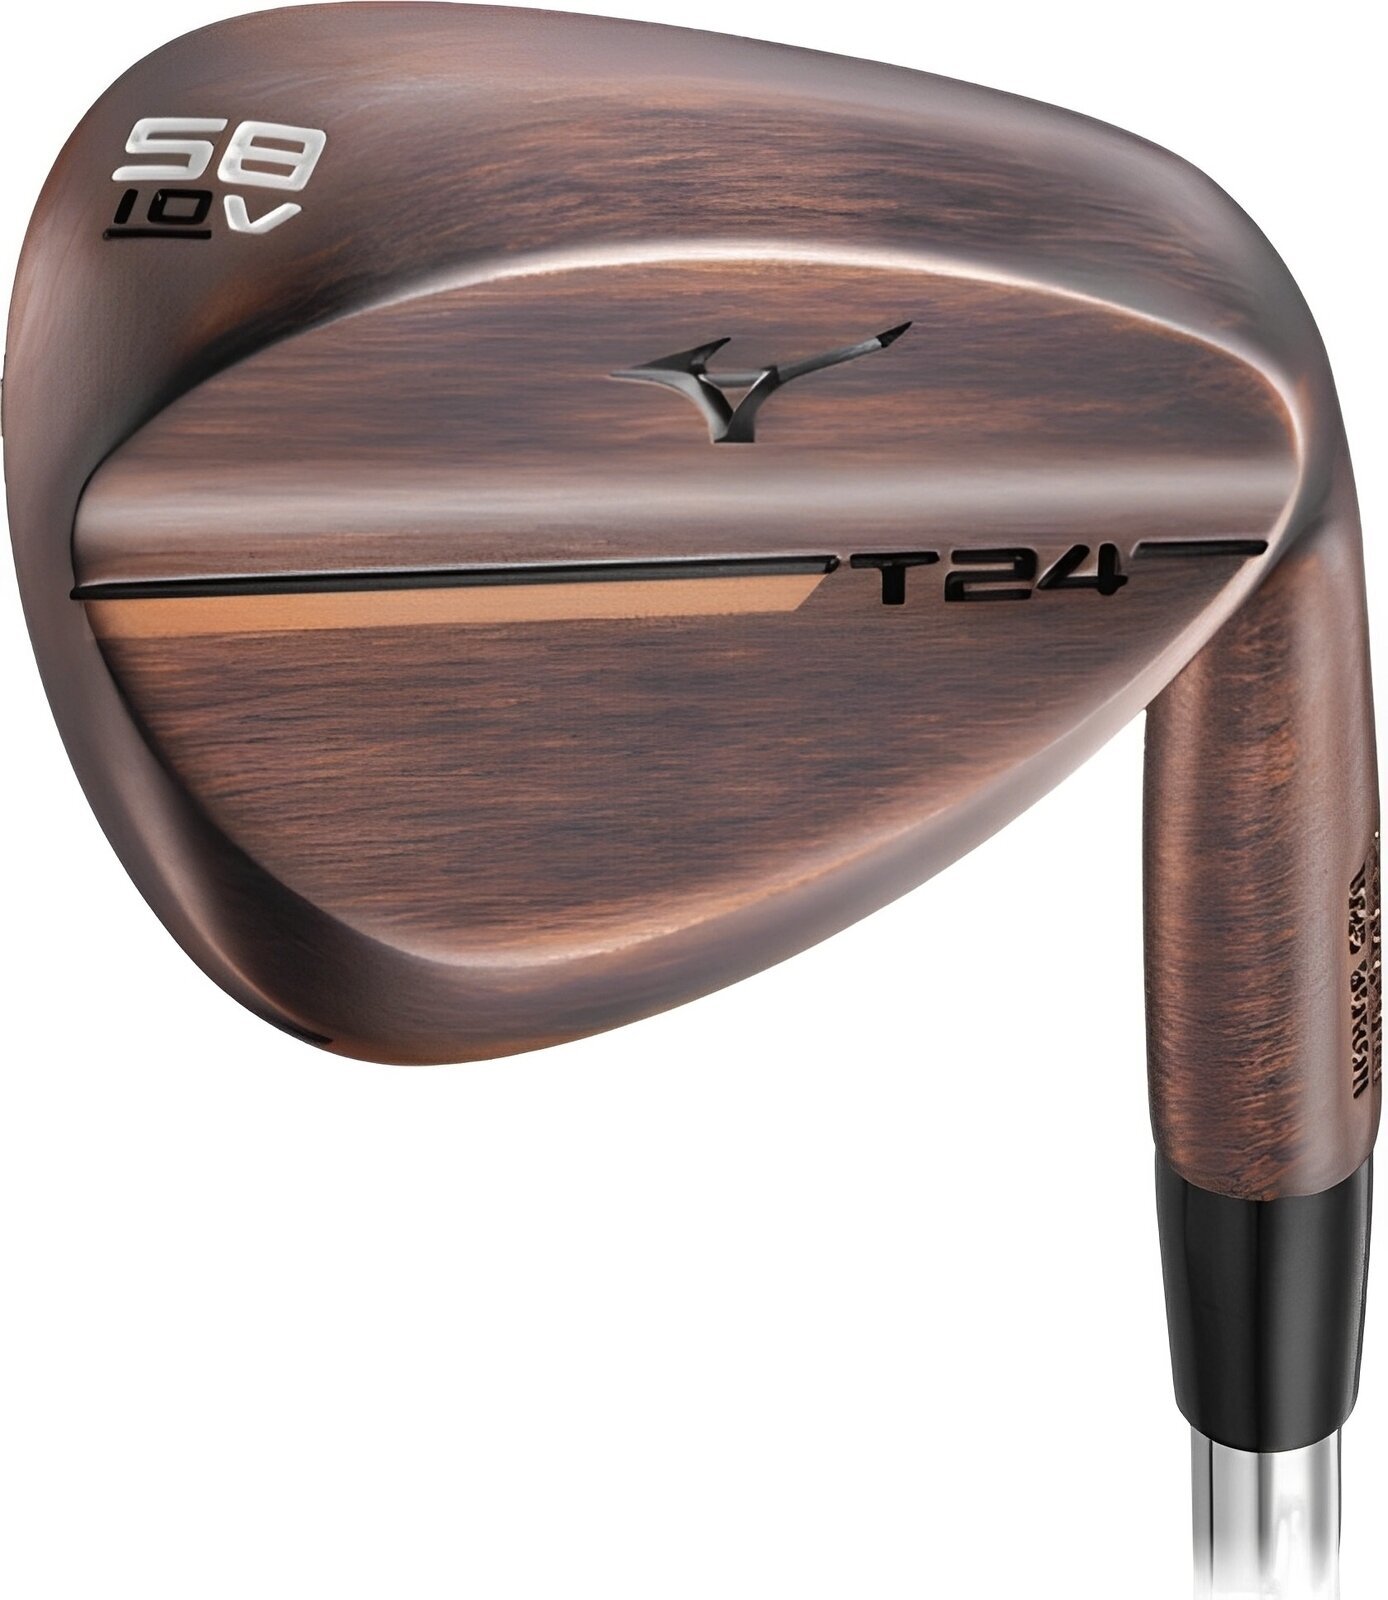 Mazza da golf - wedge Mizuno T24 Copper Wedge RH 56 S